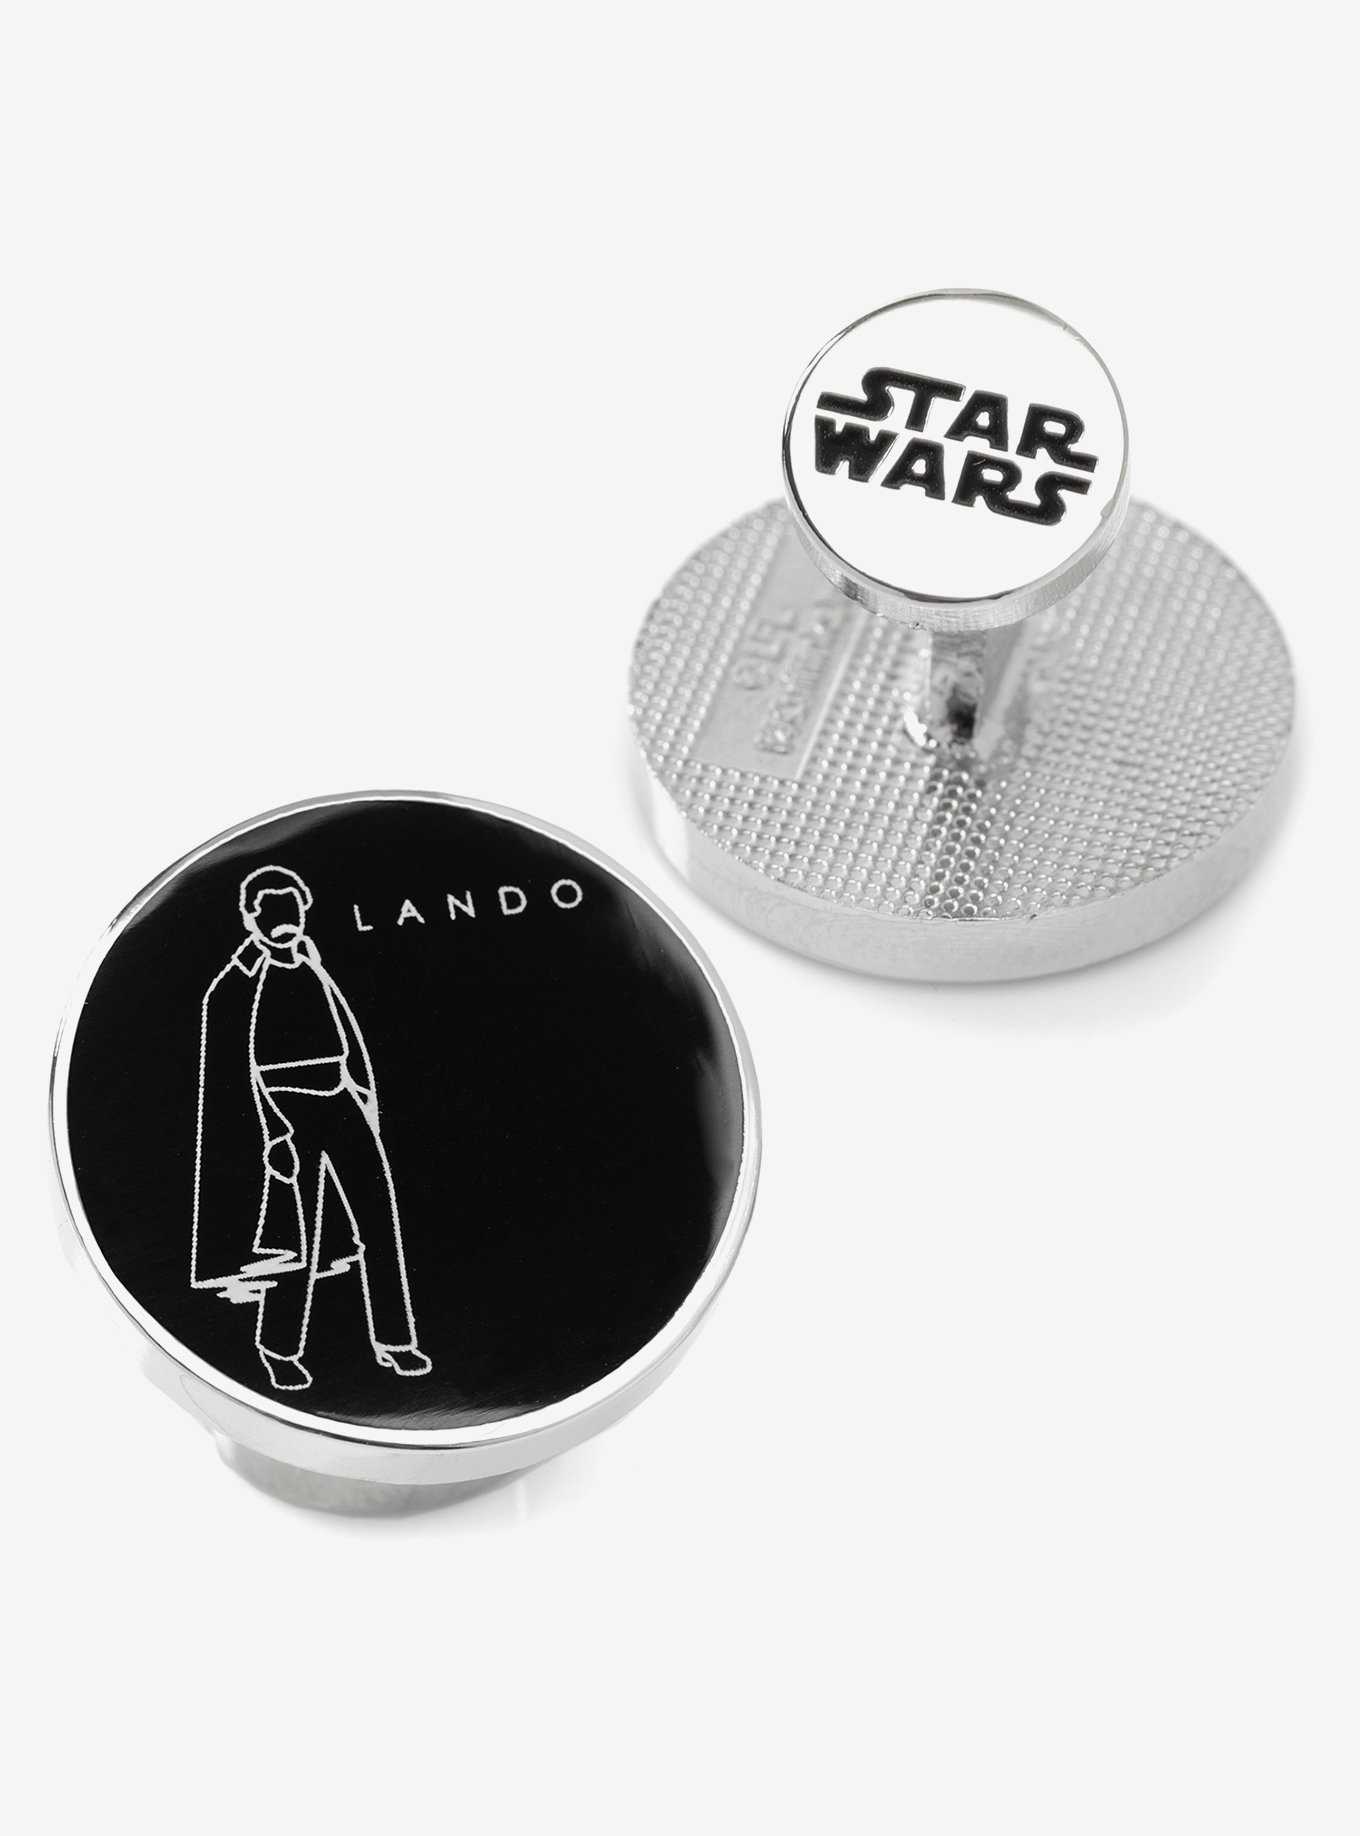 Star Wars Lando Cufflinks, , hi-res